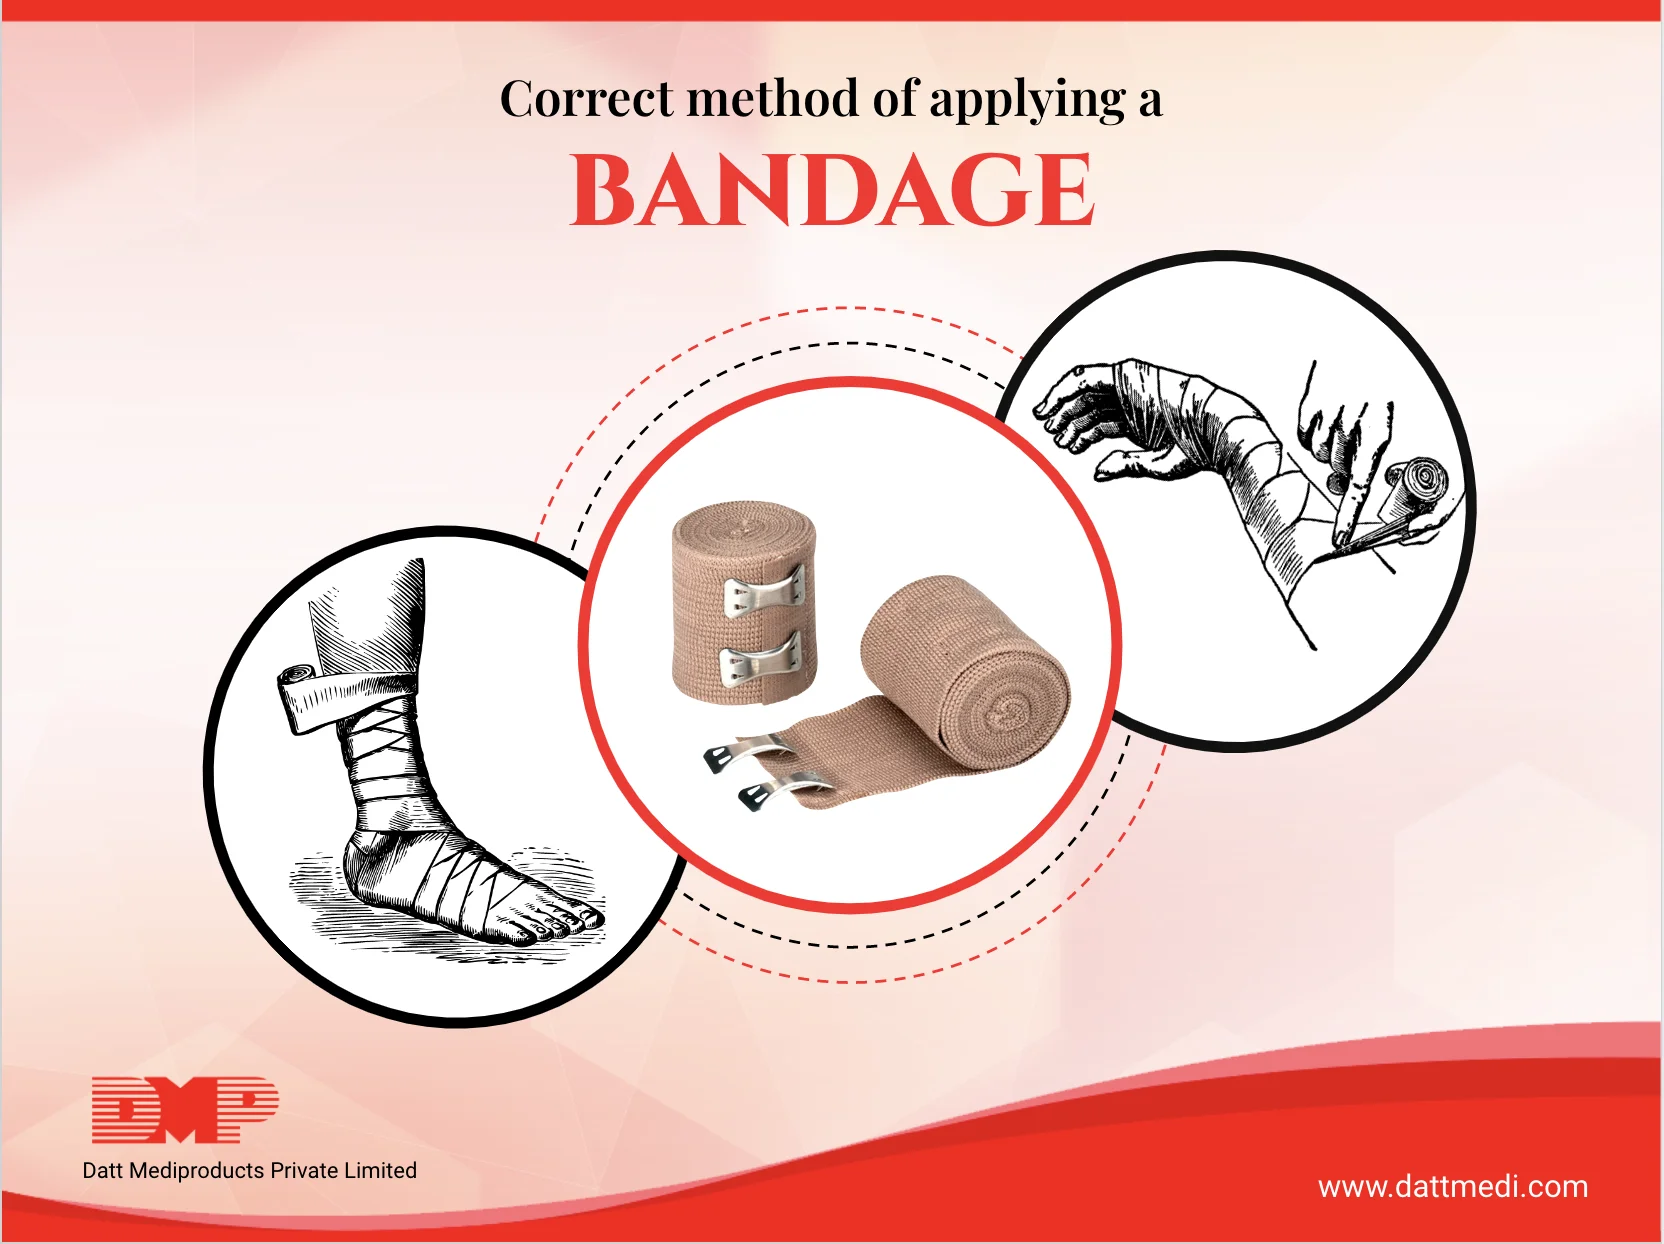 Correct method of applying a bandage